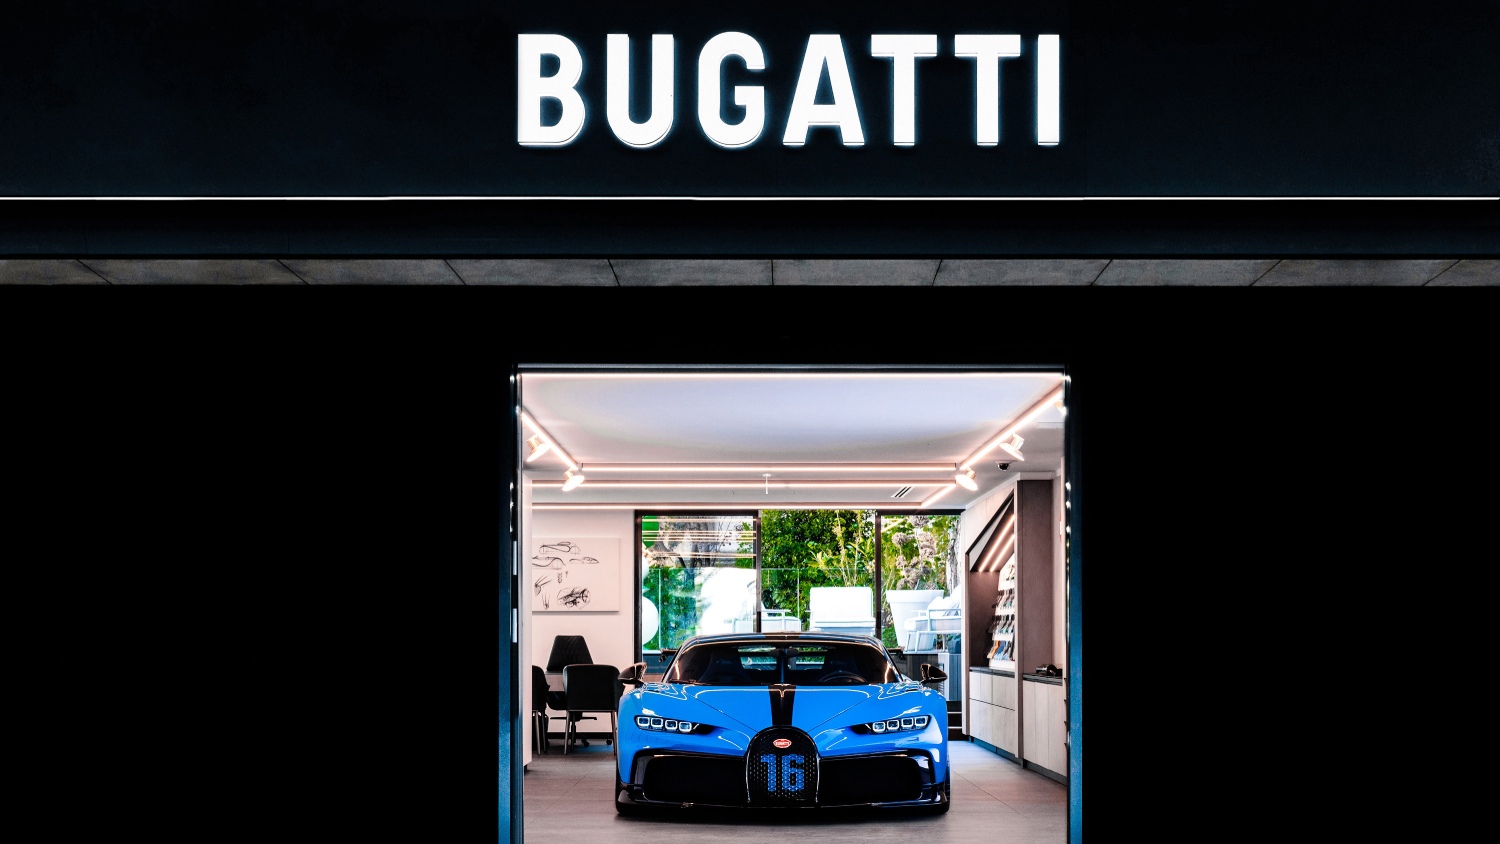 The new Bugatti logo on a building with the Bugatti Chiron Pur Sport under it